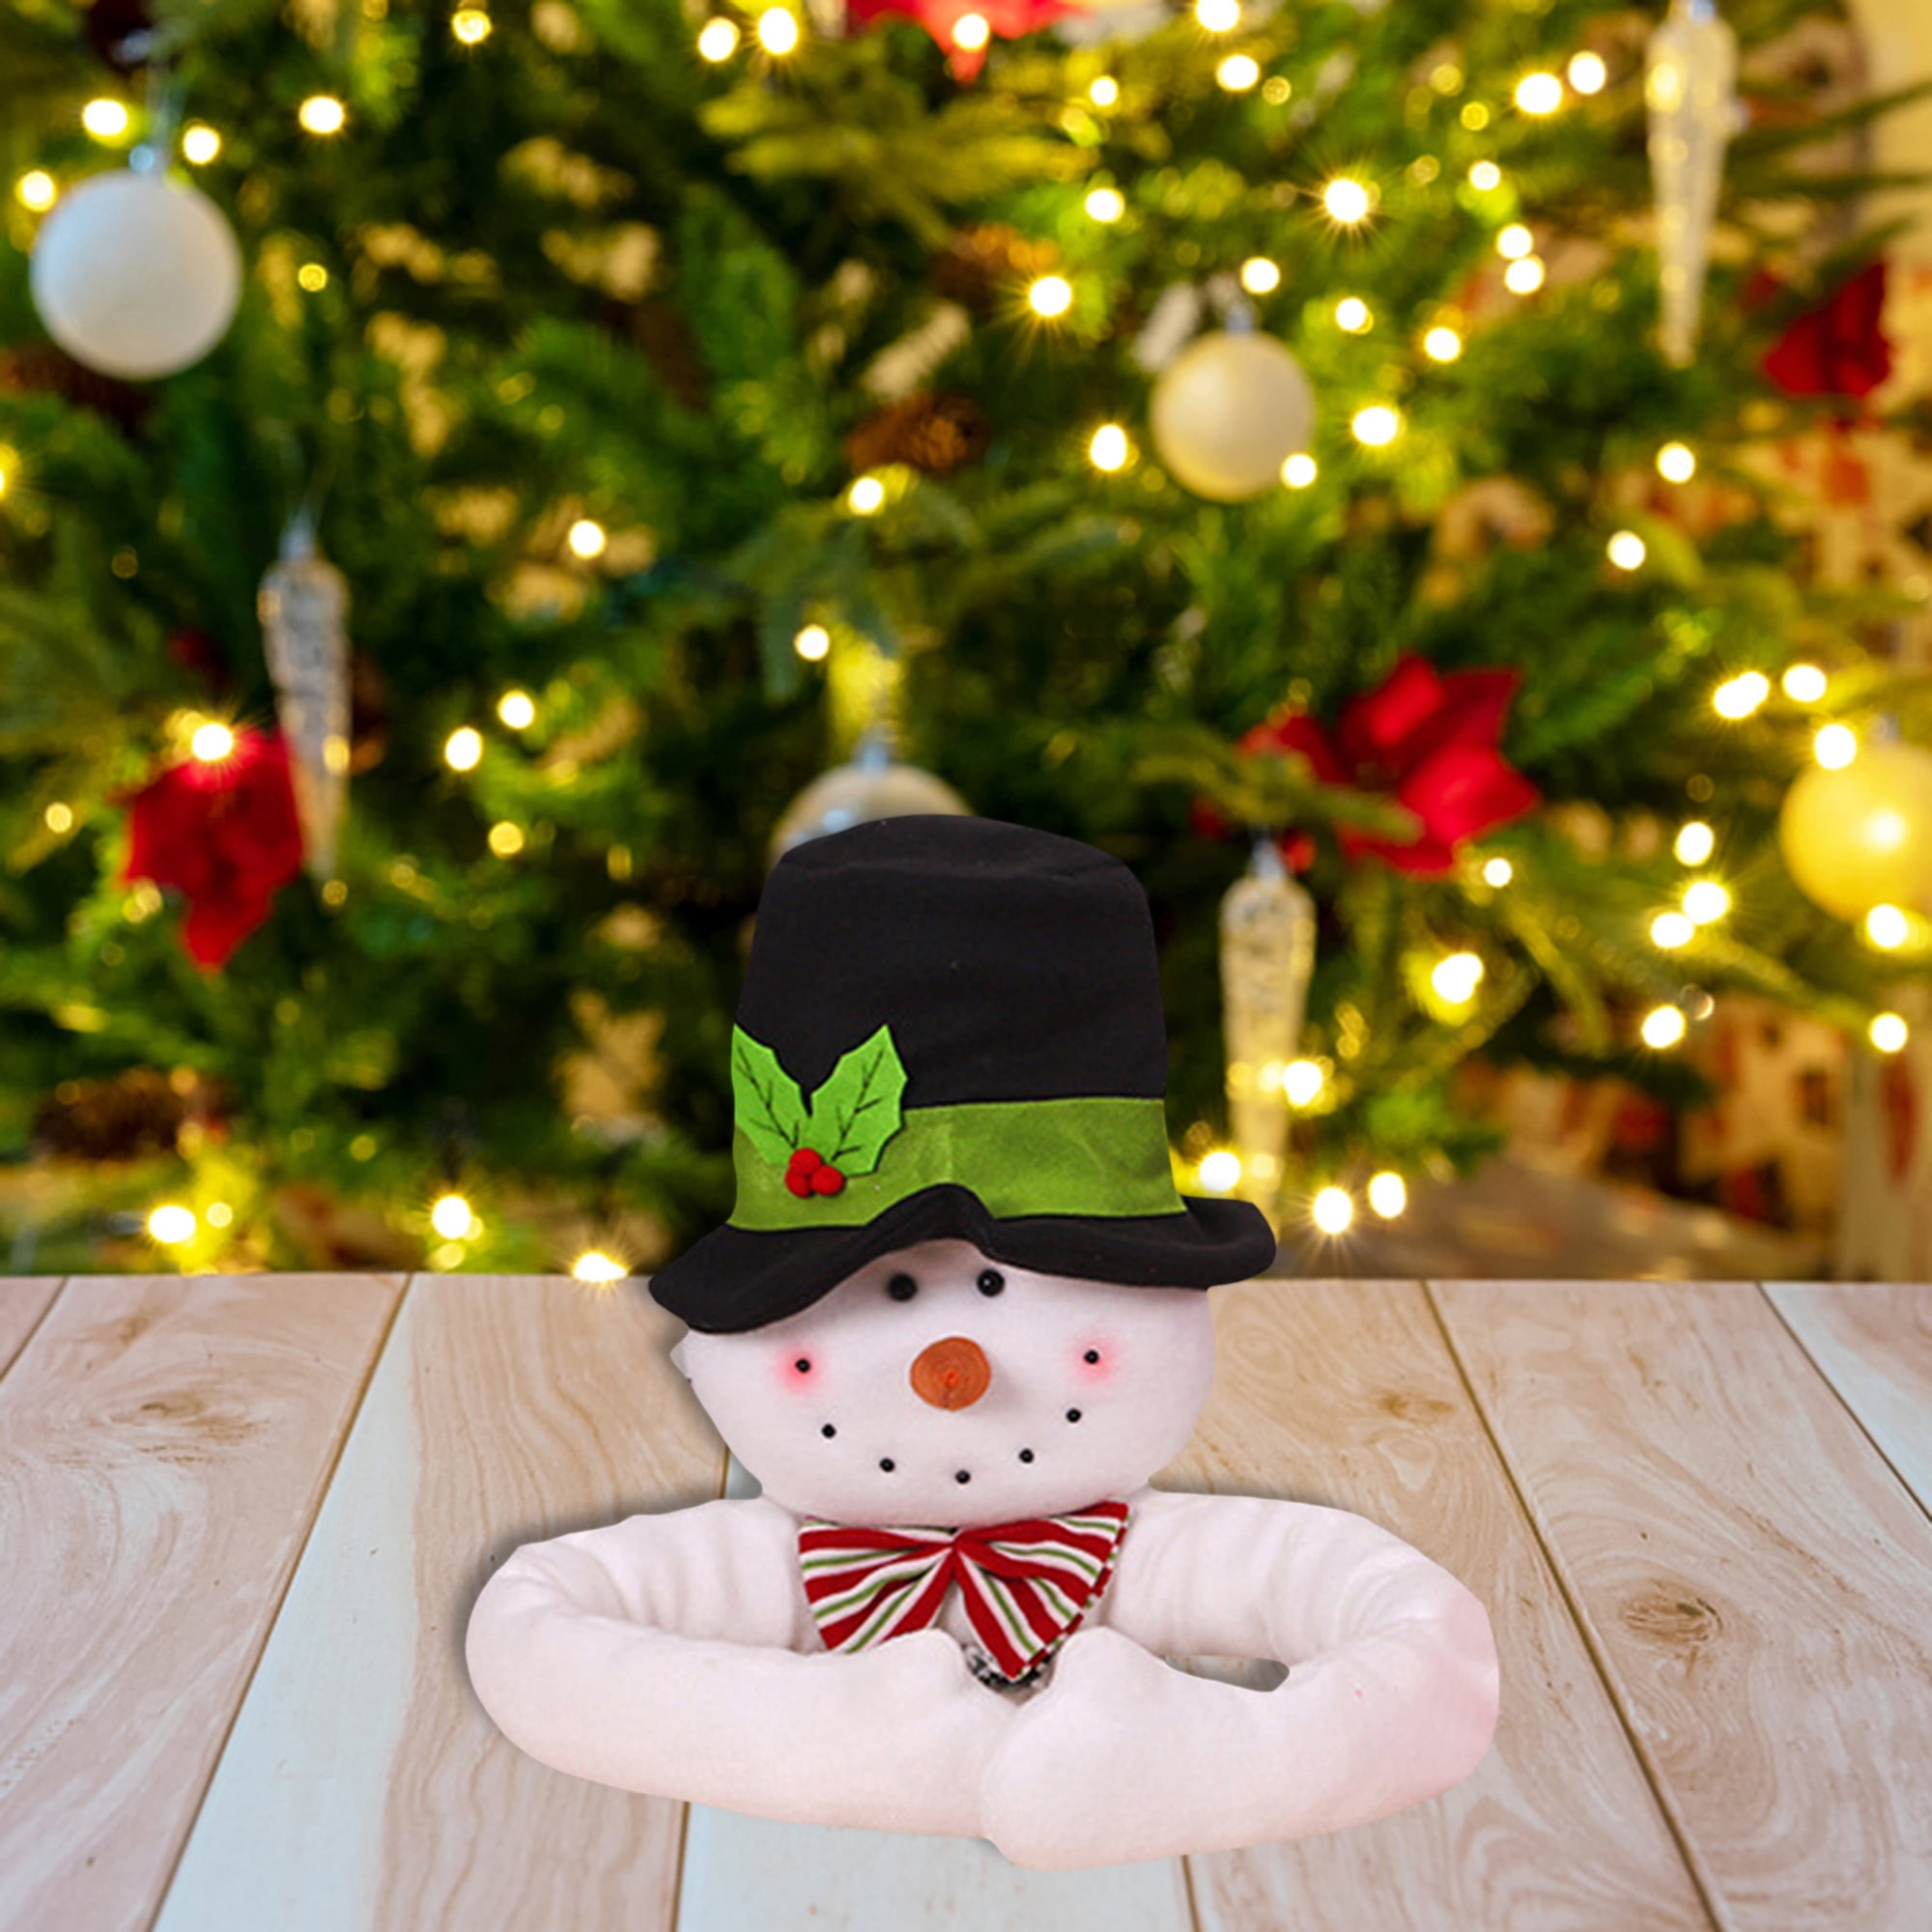 Lingouzi Christmas Tree Topper - Santa Claus Snowman Head, Arms and Legs  for Christmas Tree Decorations, Creative Christmas Tree Doll Topper for